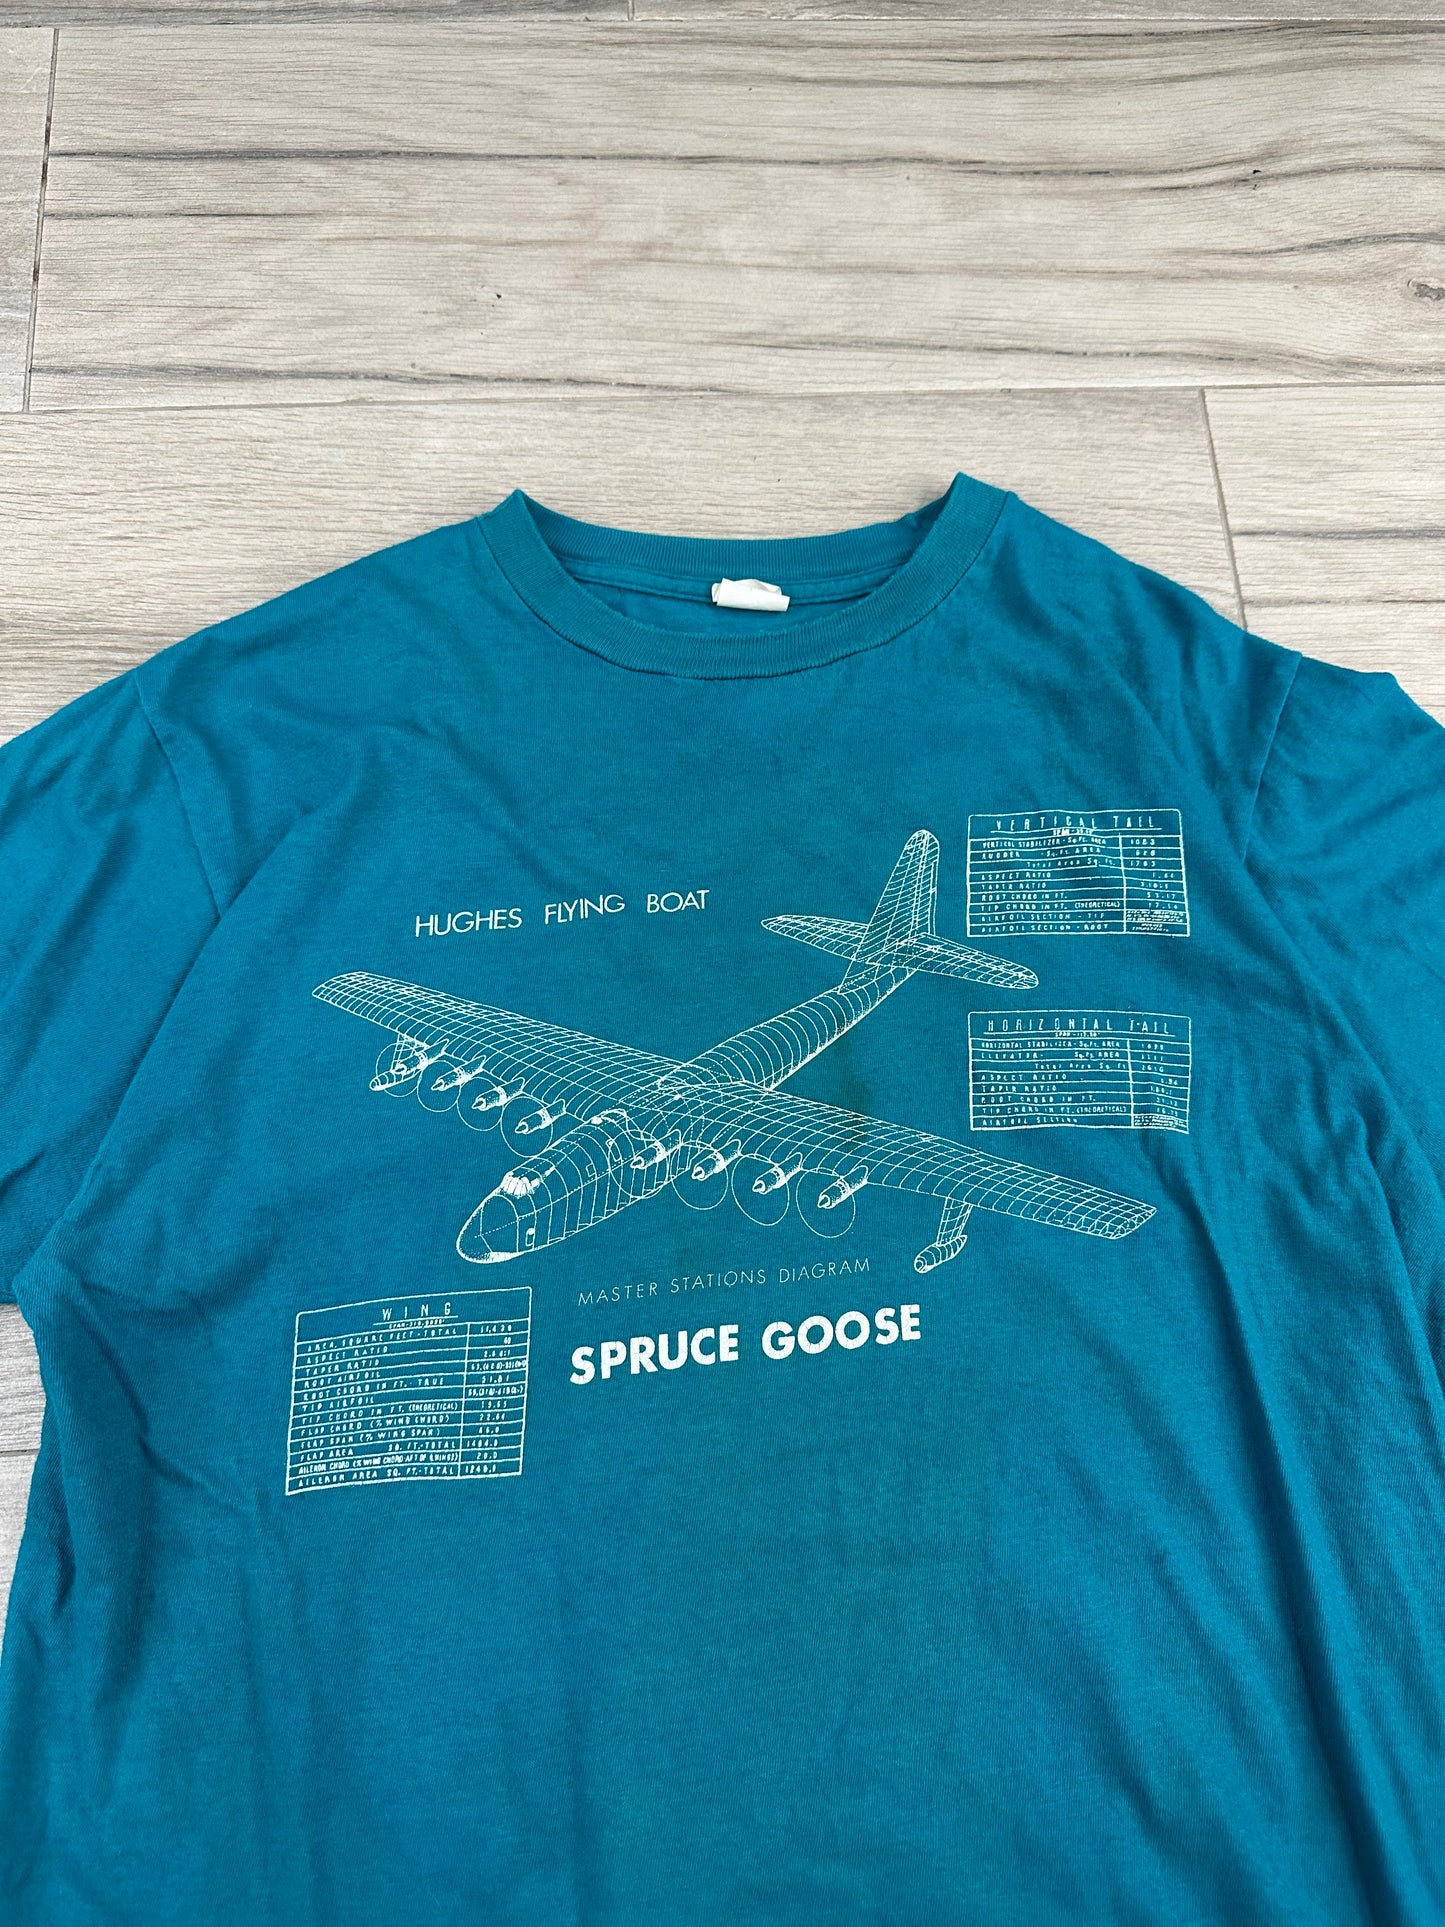 Spruce Goose Tee - M